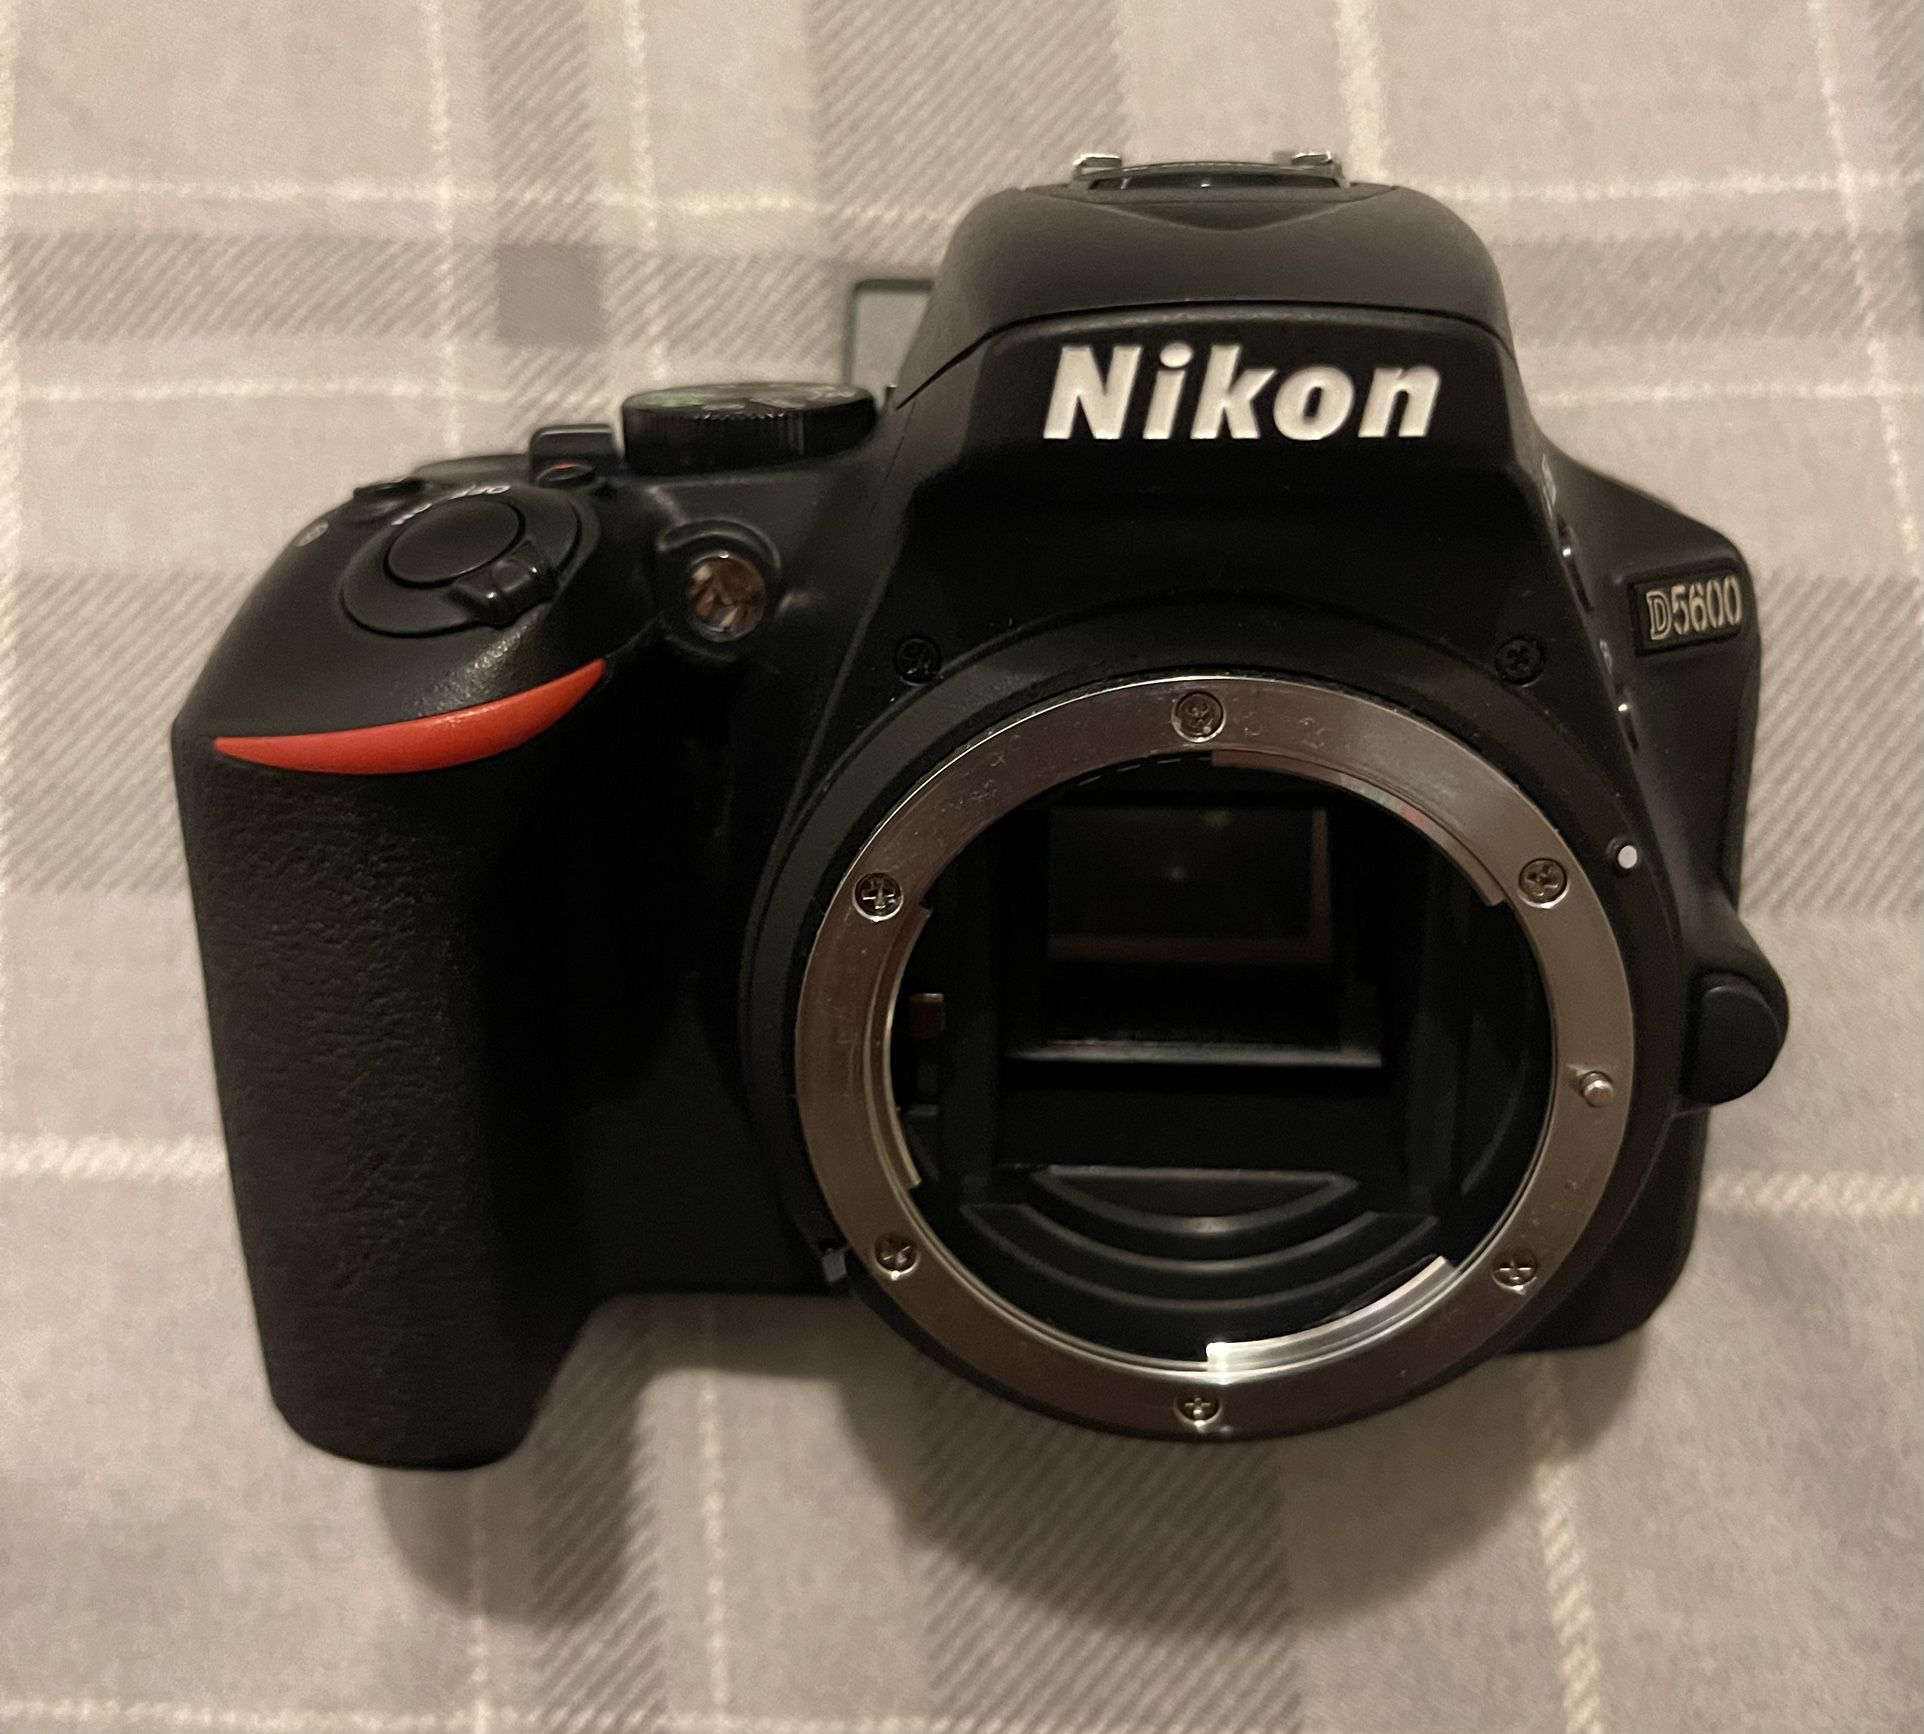 Nikon D5600 DSLR Camera and Accessories